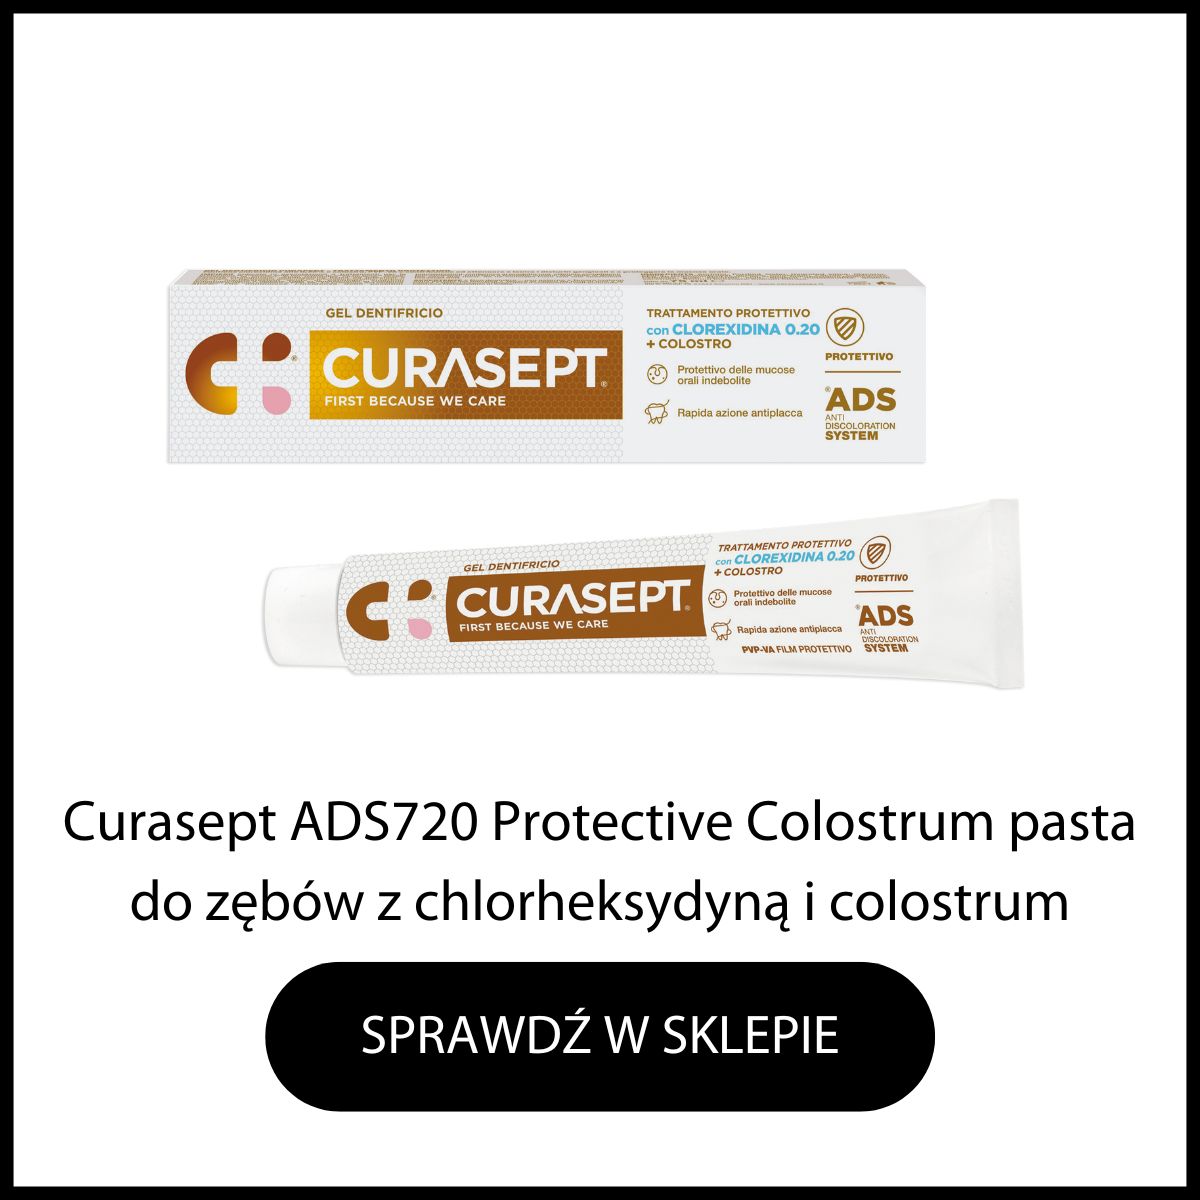 Curasept ADS720 Protective Colostrum pasta z chlorheksydyną i colostrum